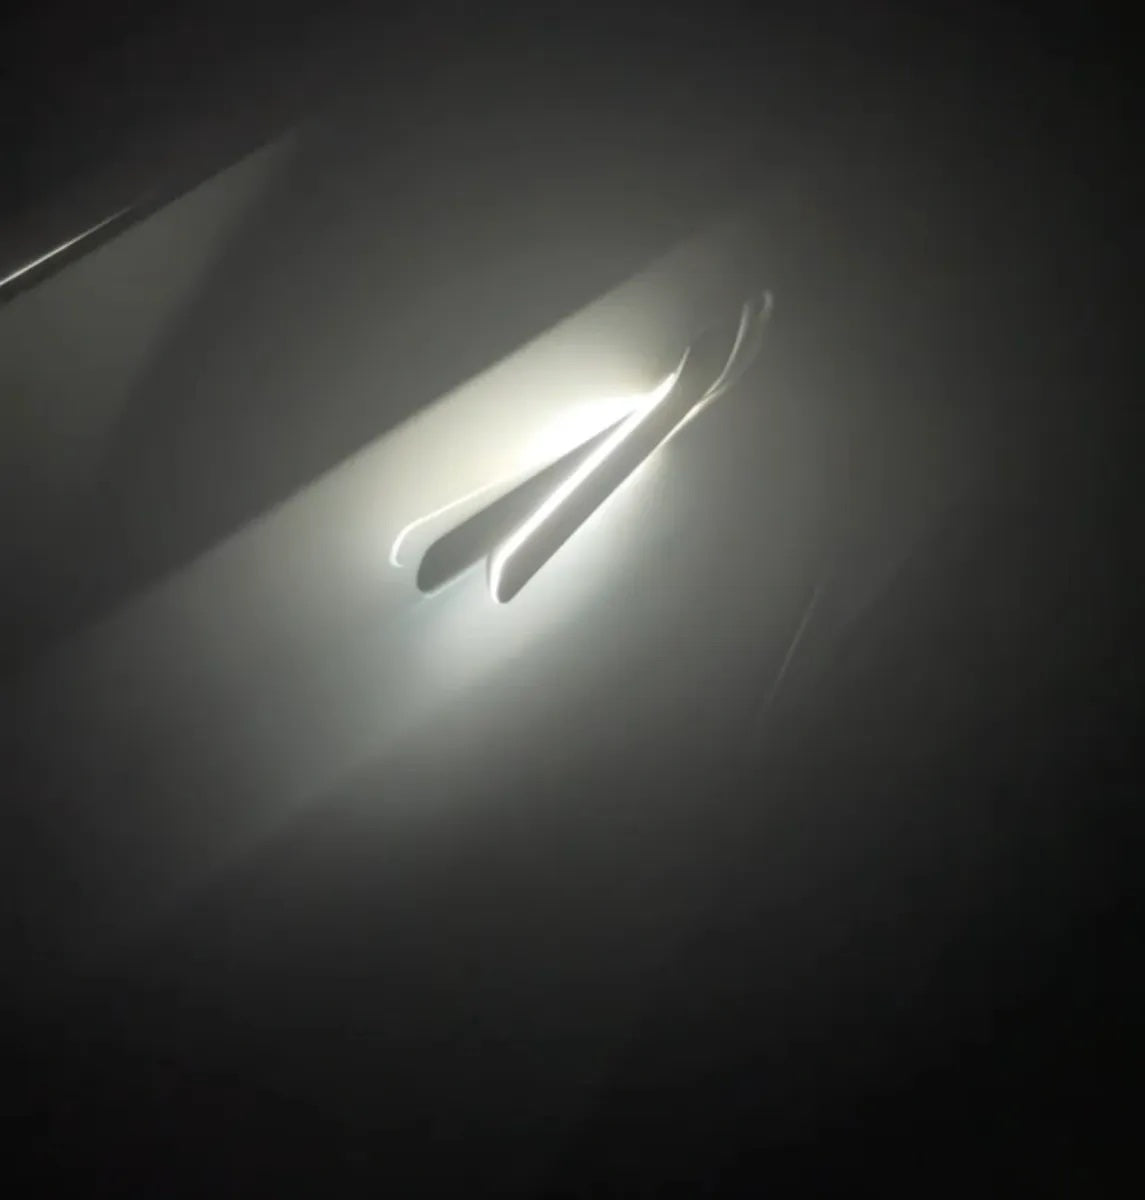 Tesla kompatibles Auto Türschnalle Türgriffschale Ambientebeleuchtung 